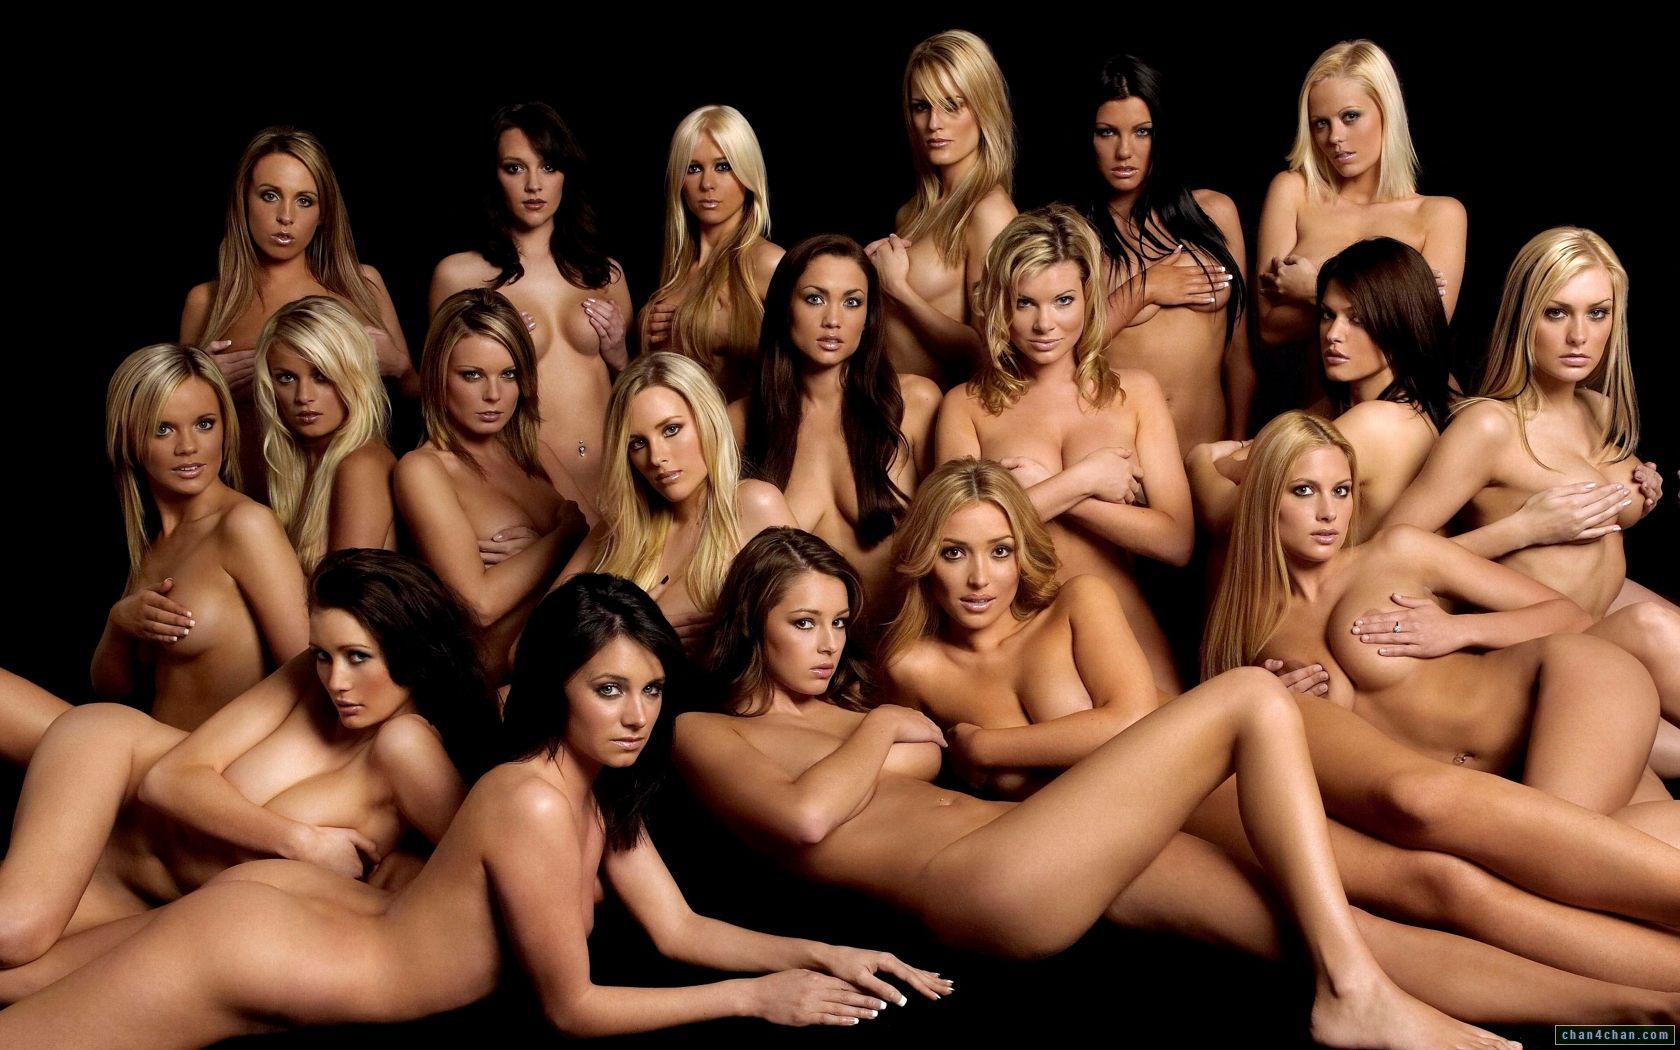 Hot group naked model